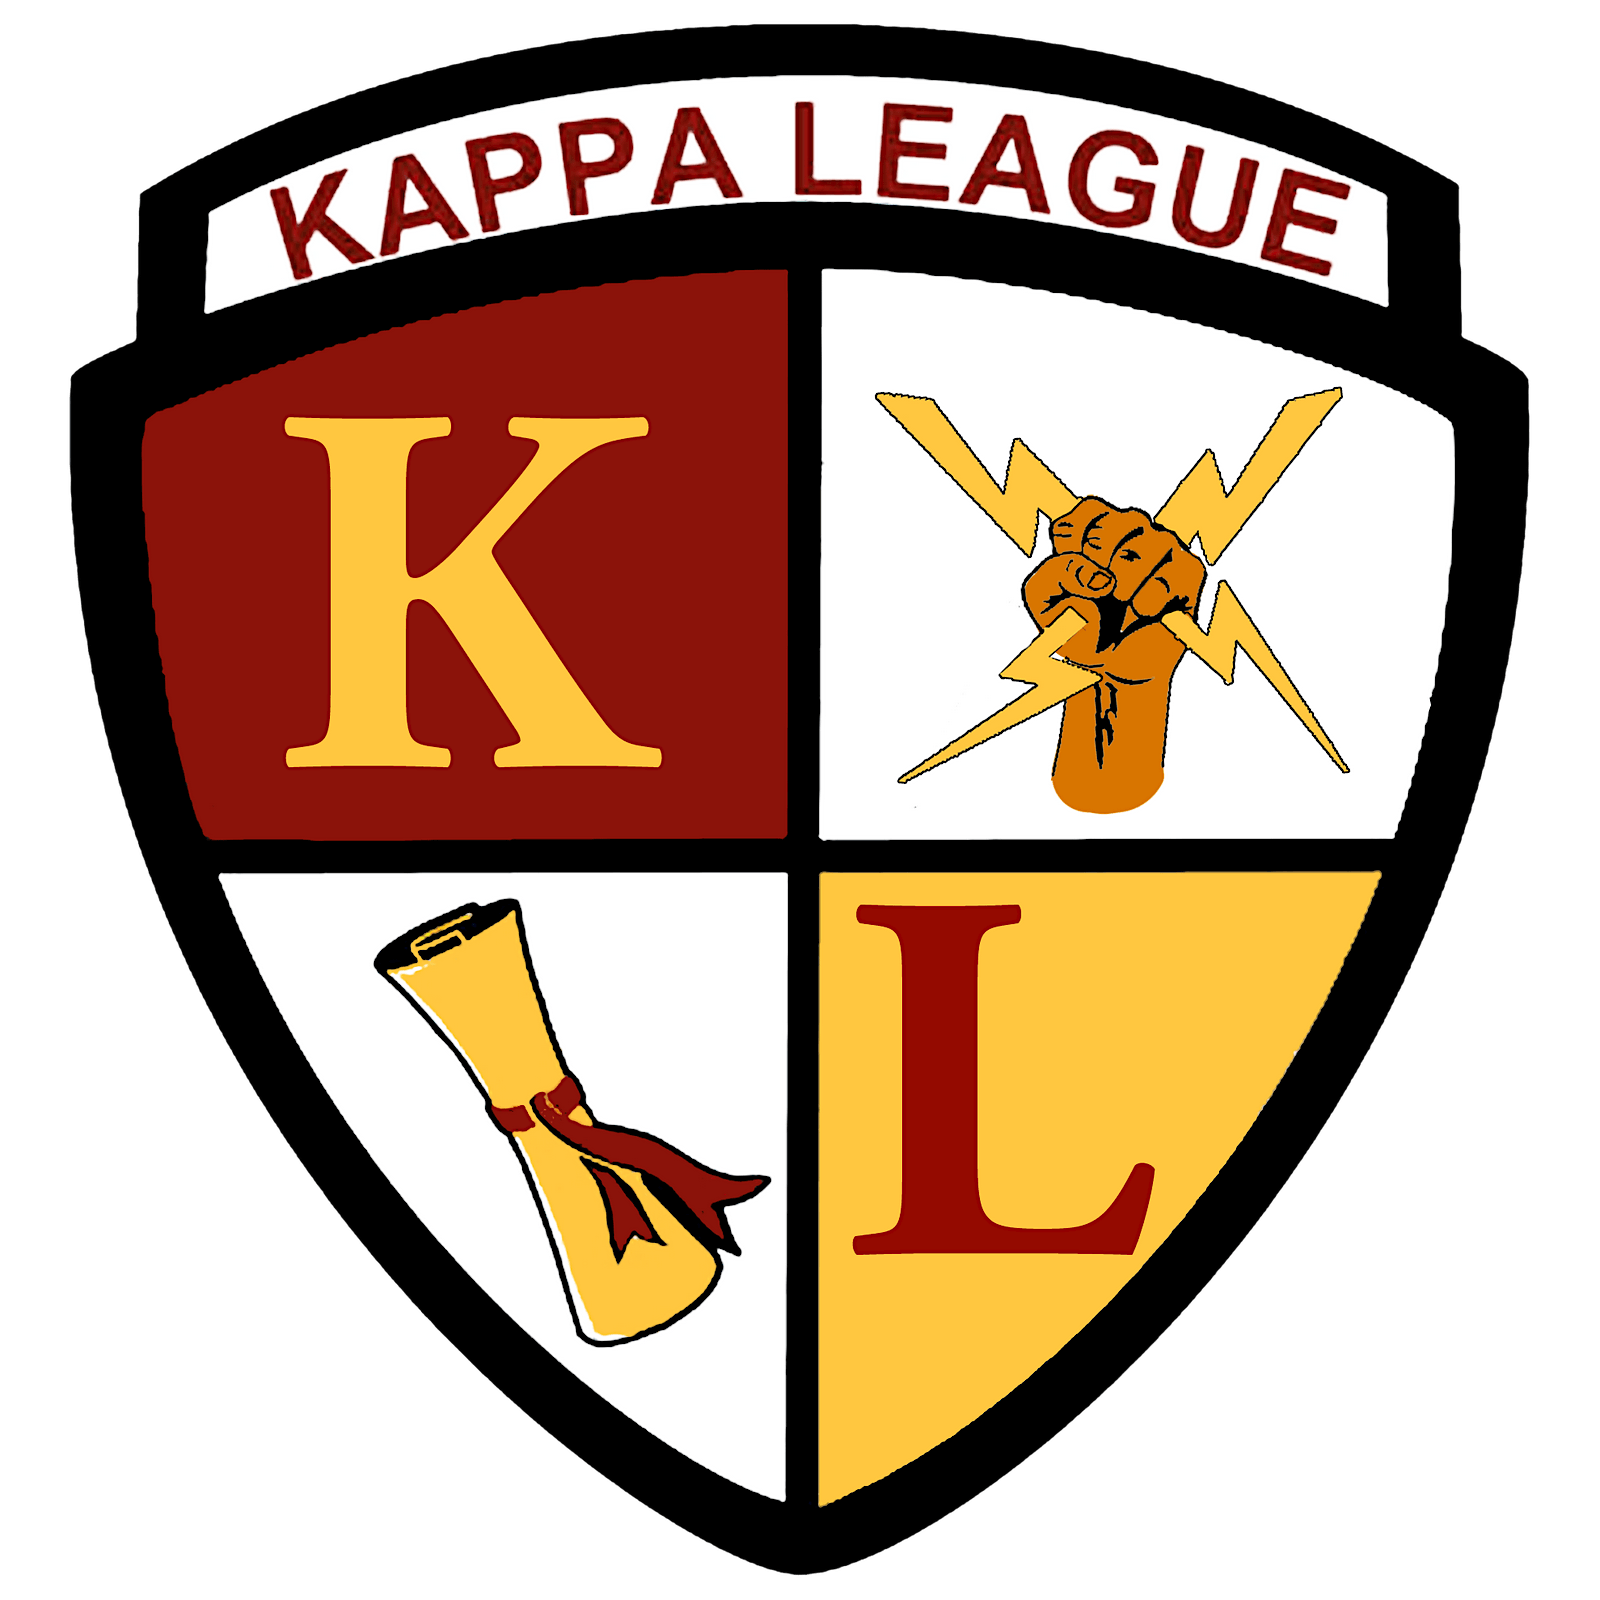 Las Vegas Kappa Leadership League